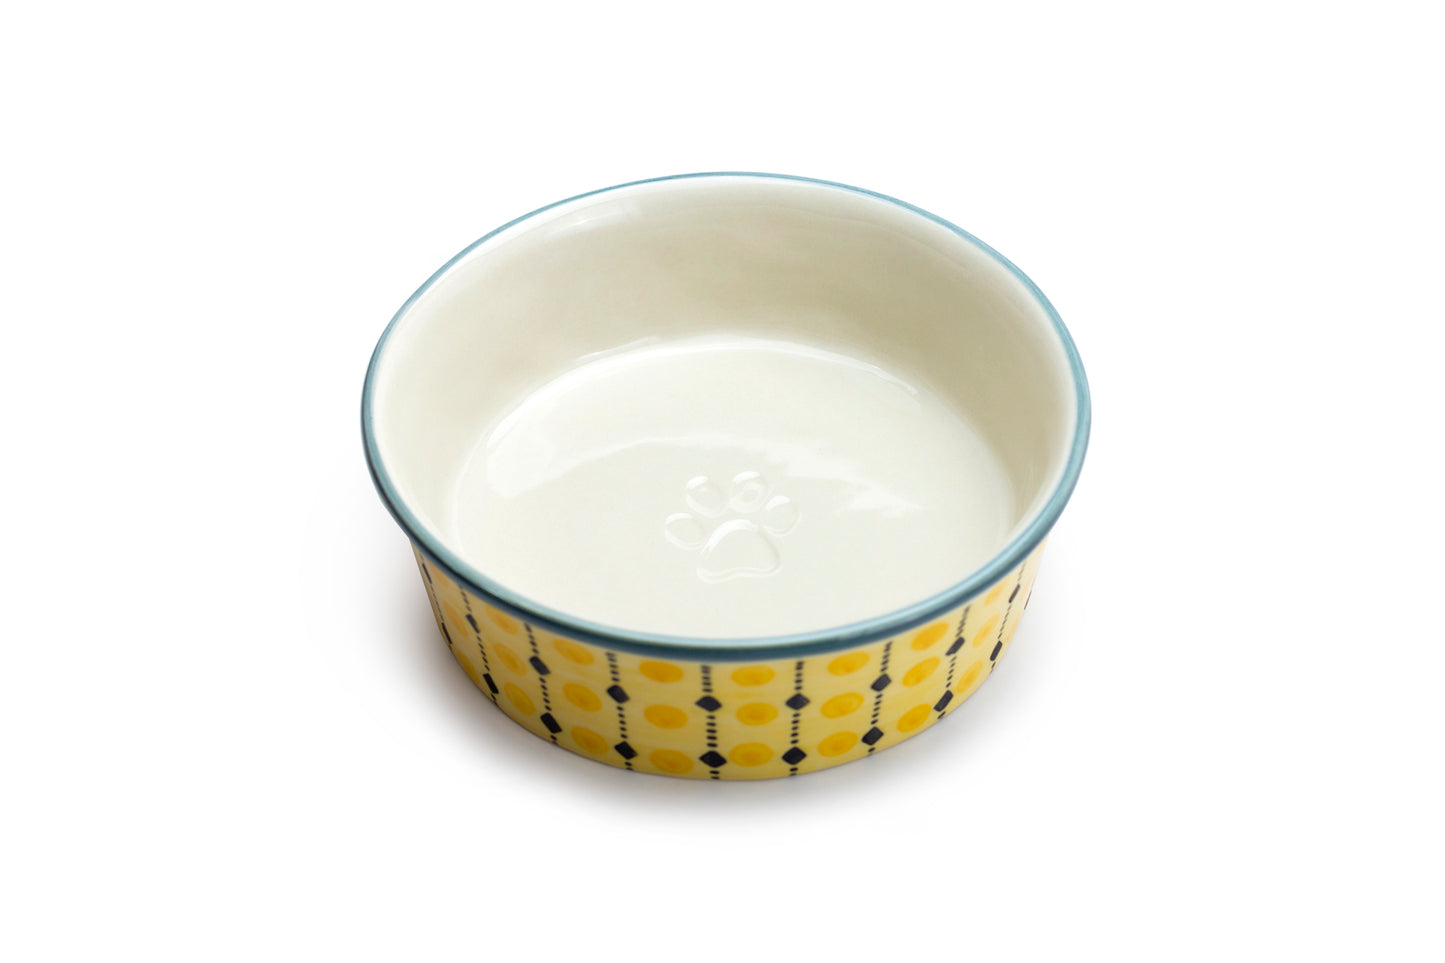 6.25" Organic Marigold Dots Heavy Weight Ceramic Pet Bowl